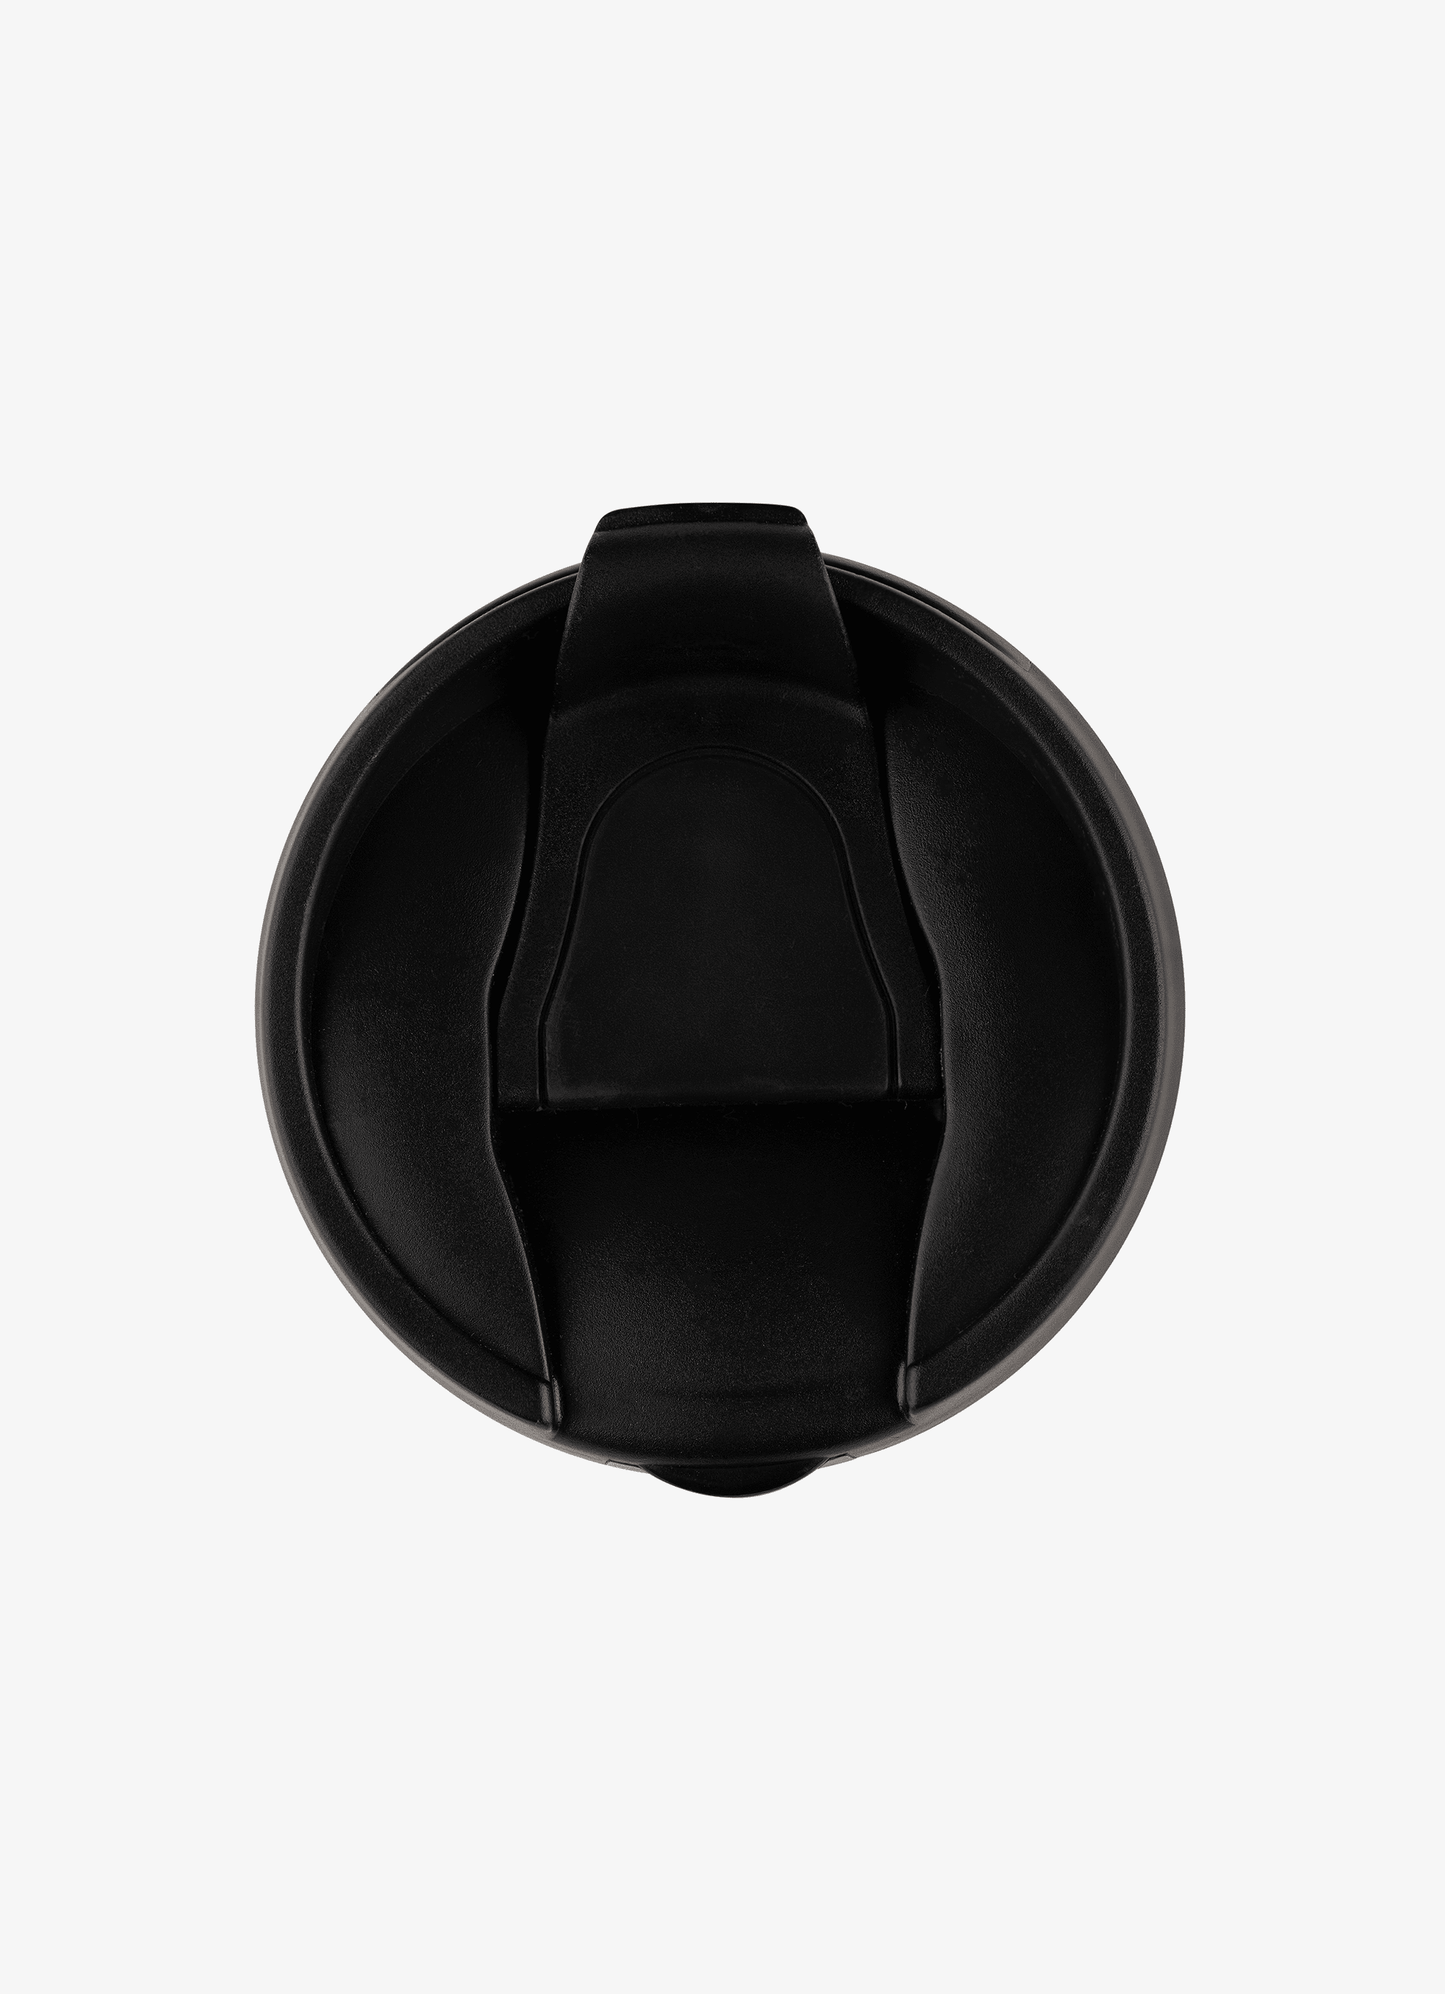 Insulated Travel Mug - 420ml - Black